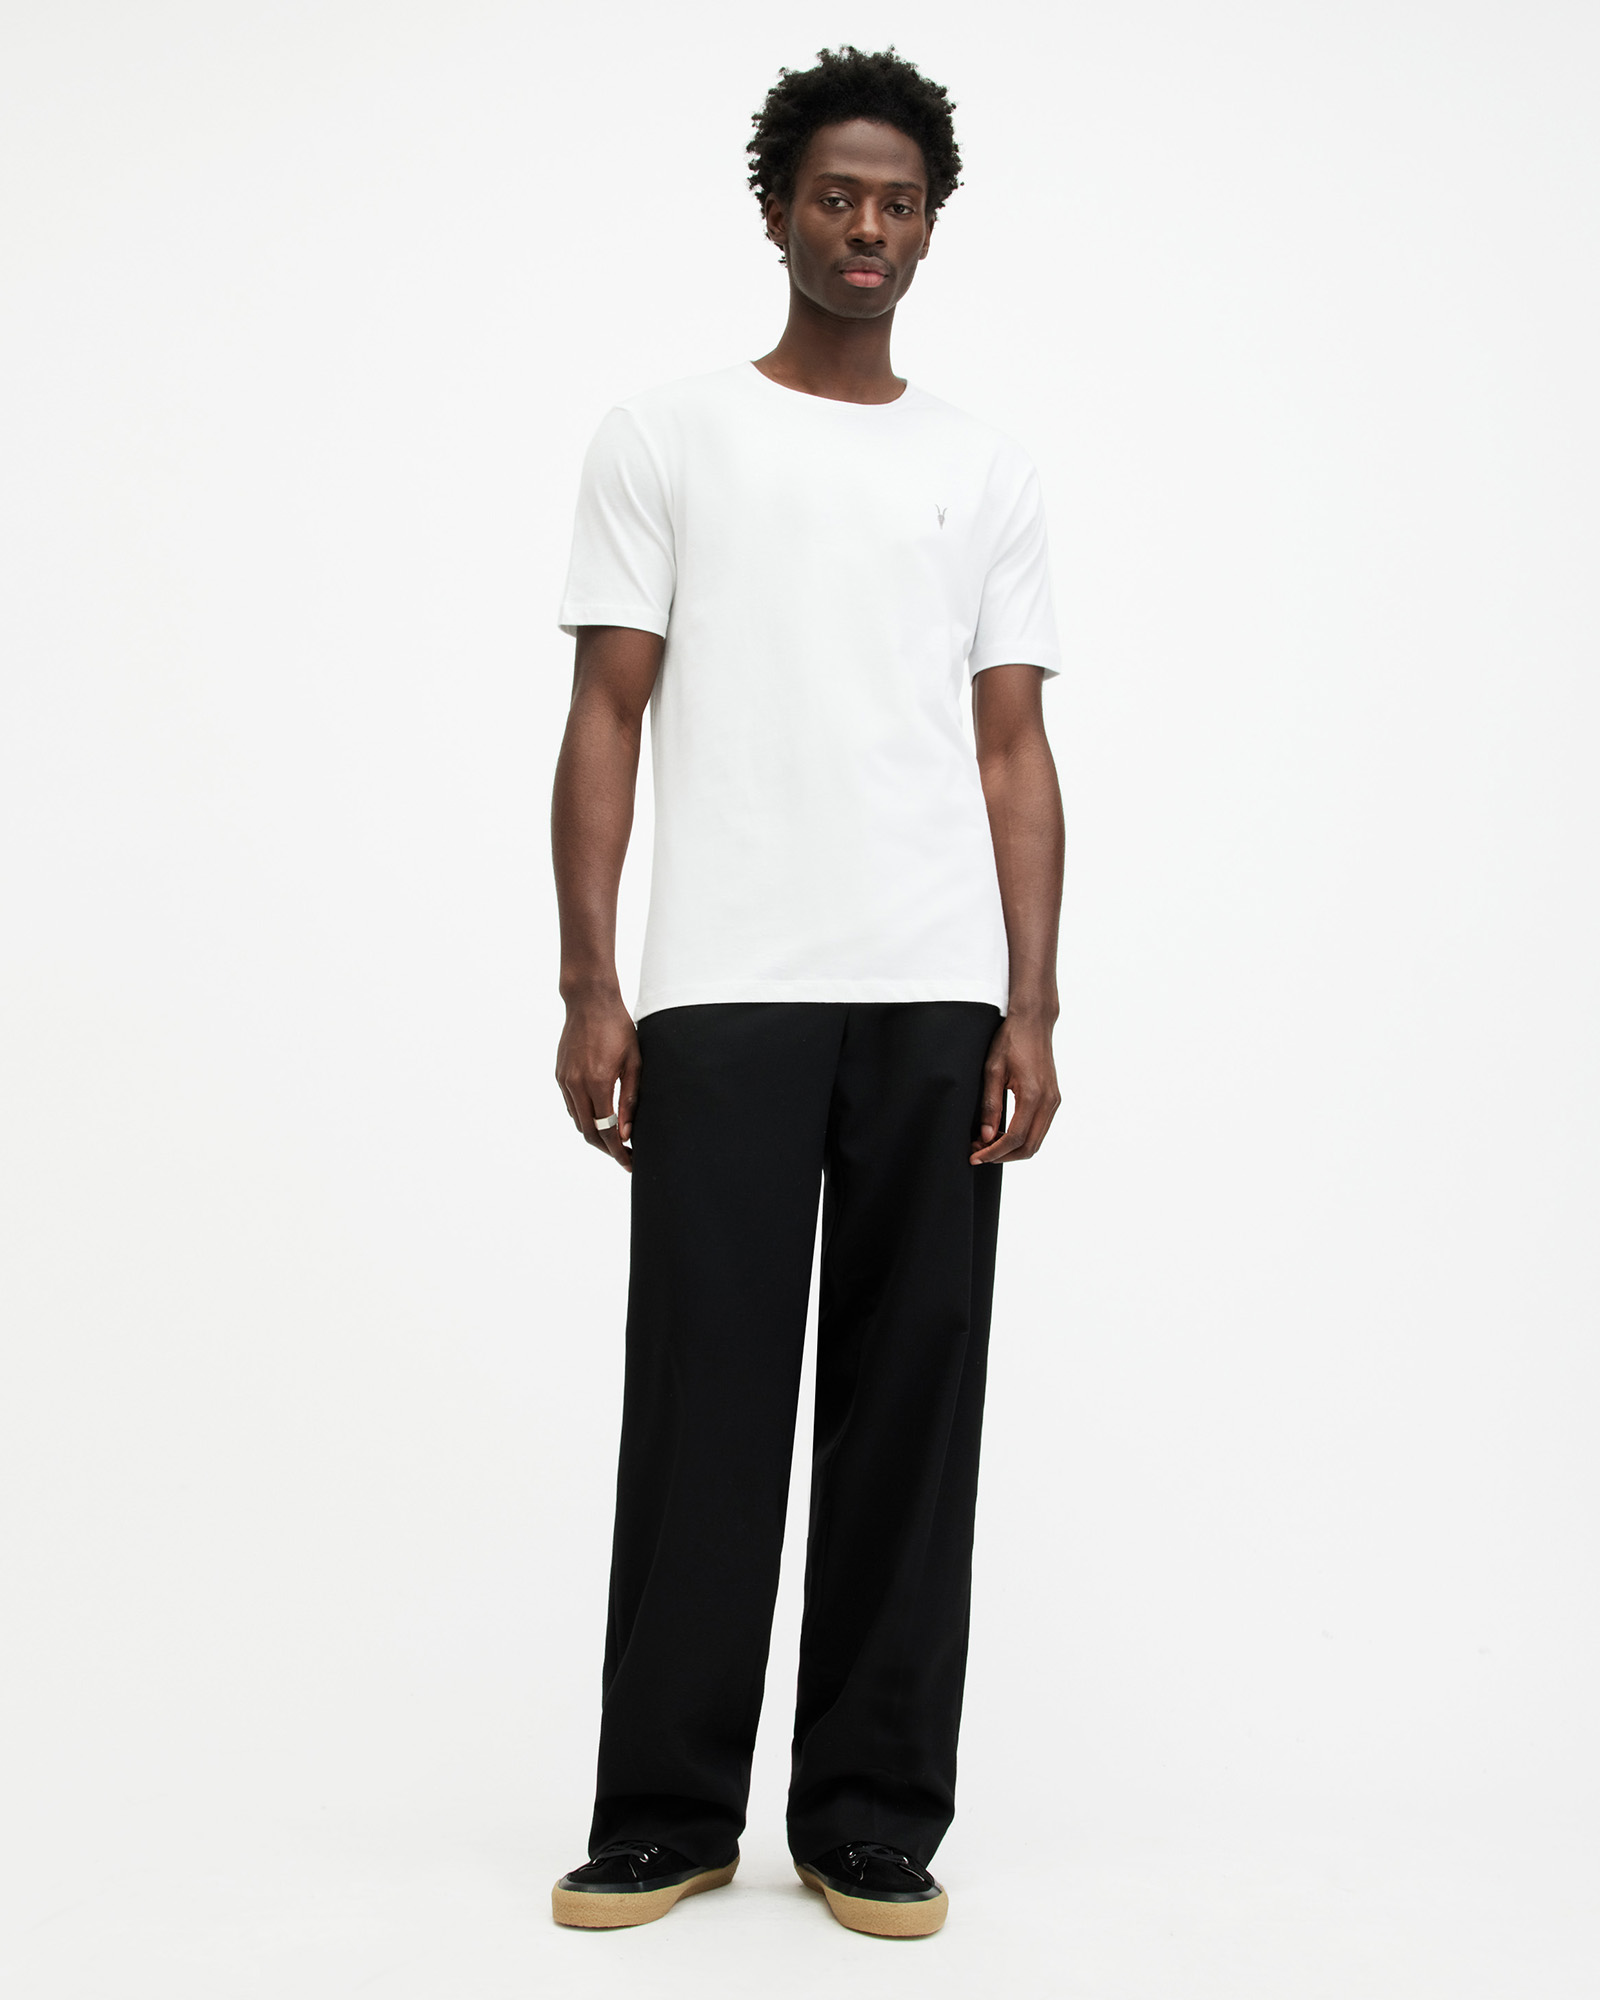 AllSaints Men's Slim Fit Brace Tonic Short Sleeve Crew T-Shirt, White, Size: S